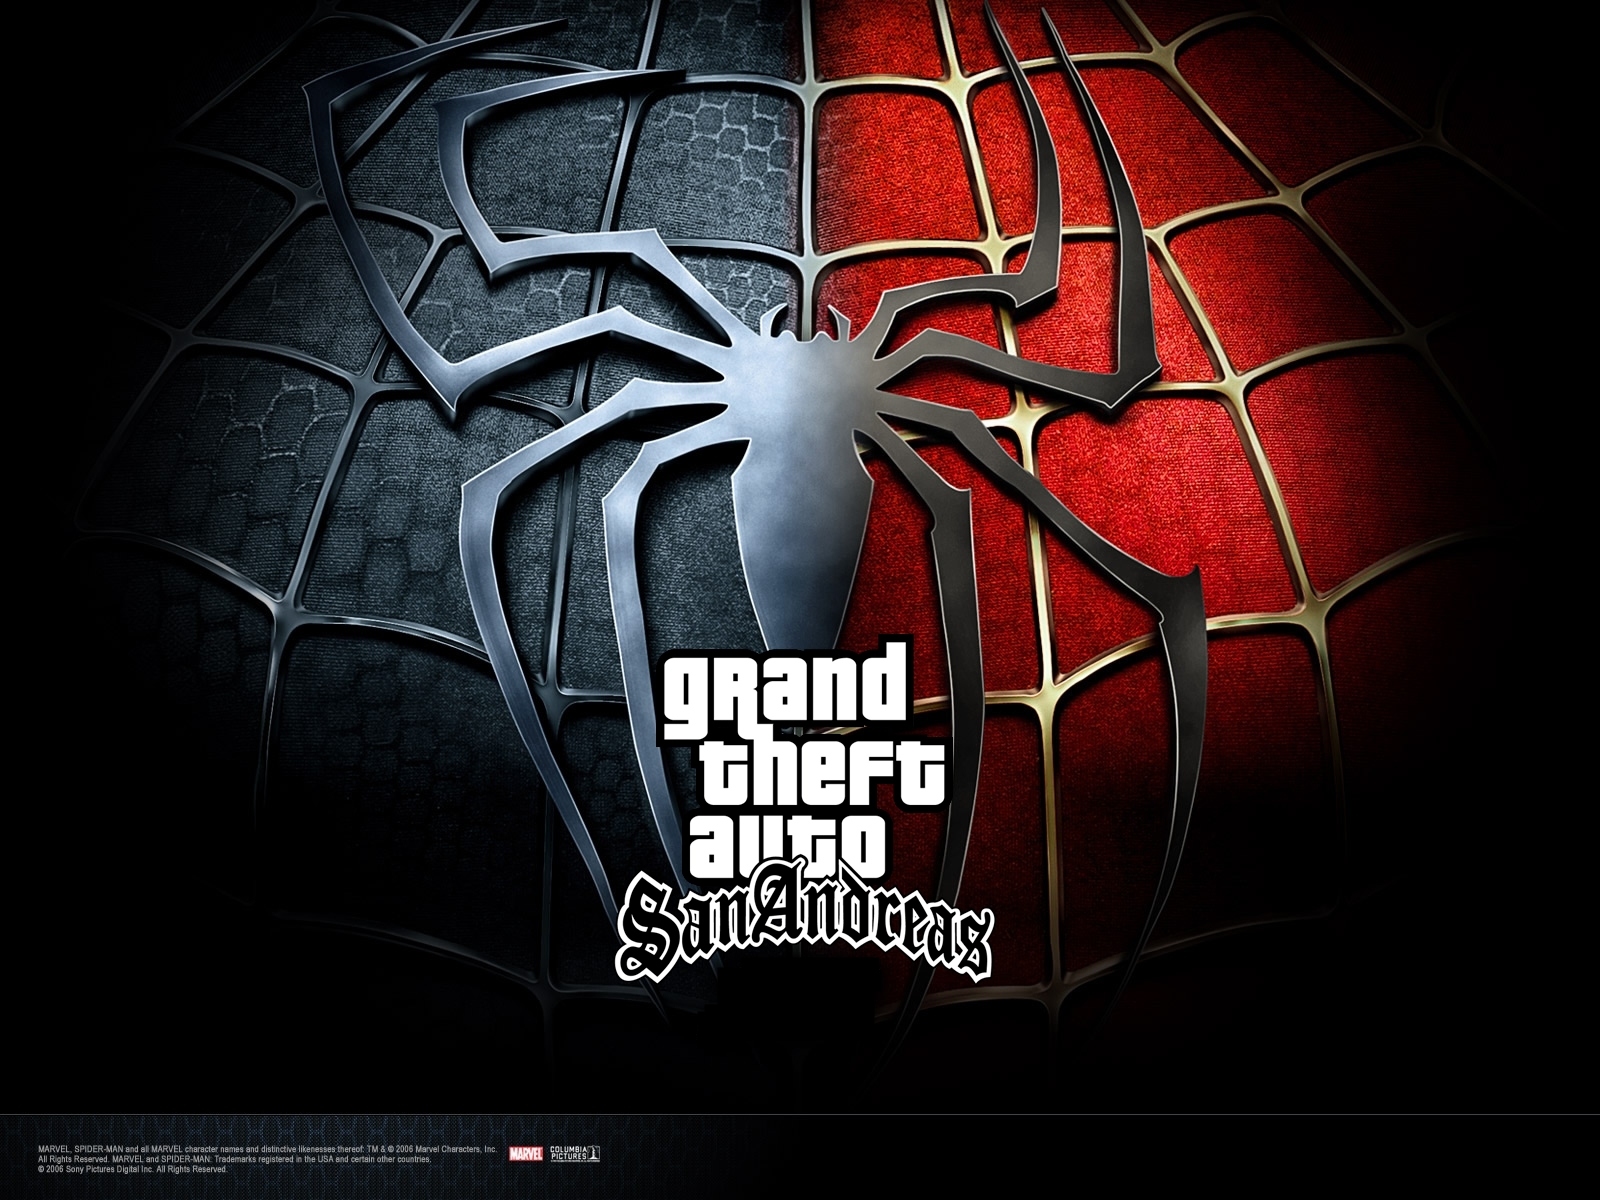 Gta spider man game download